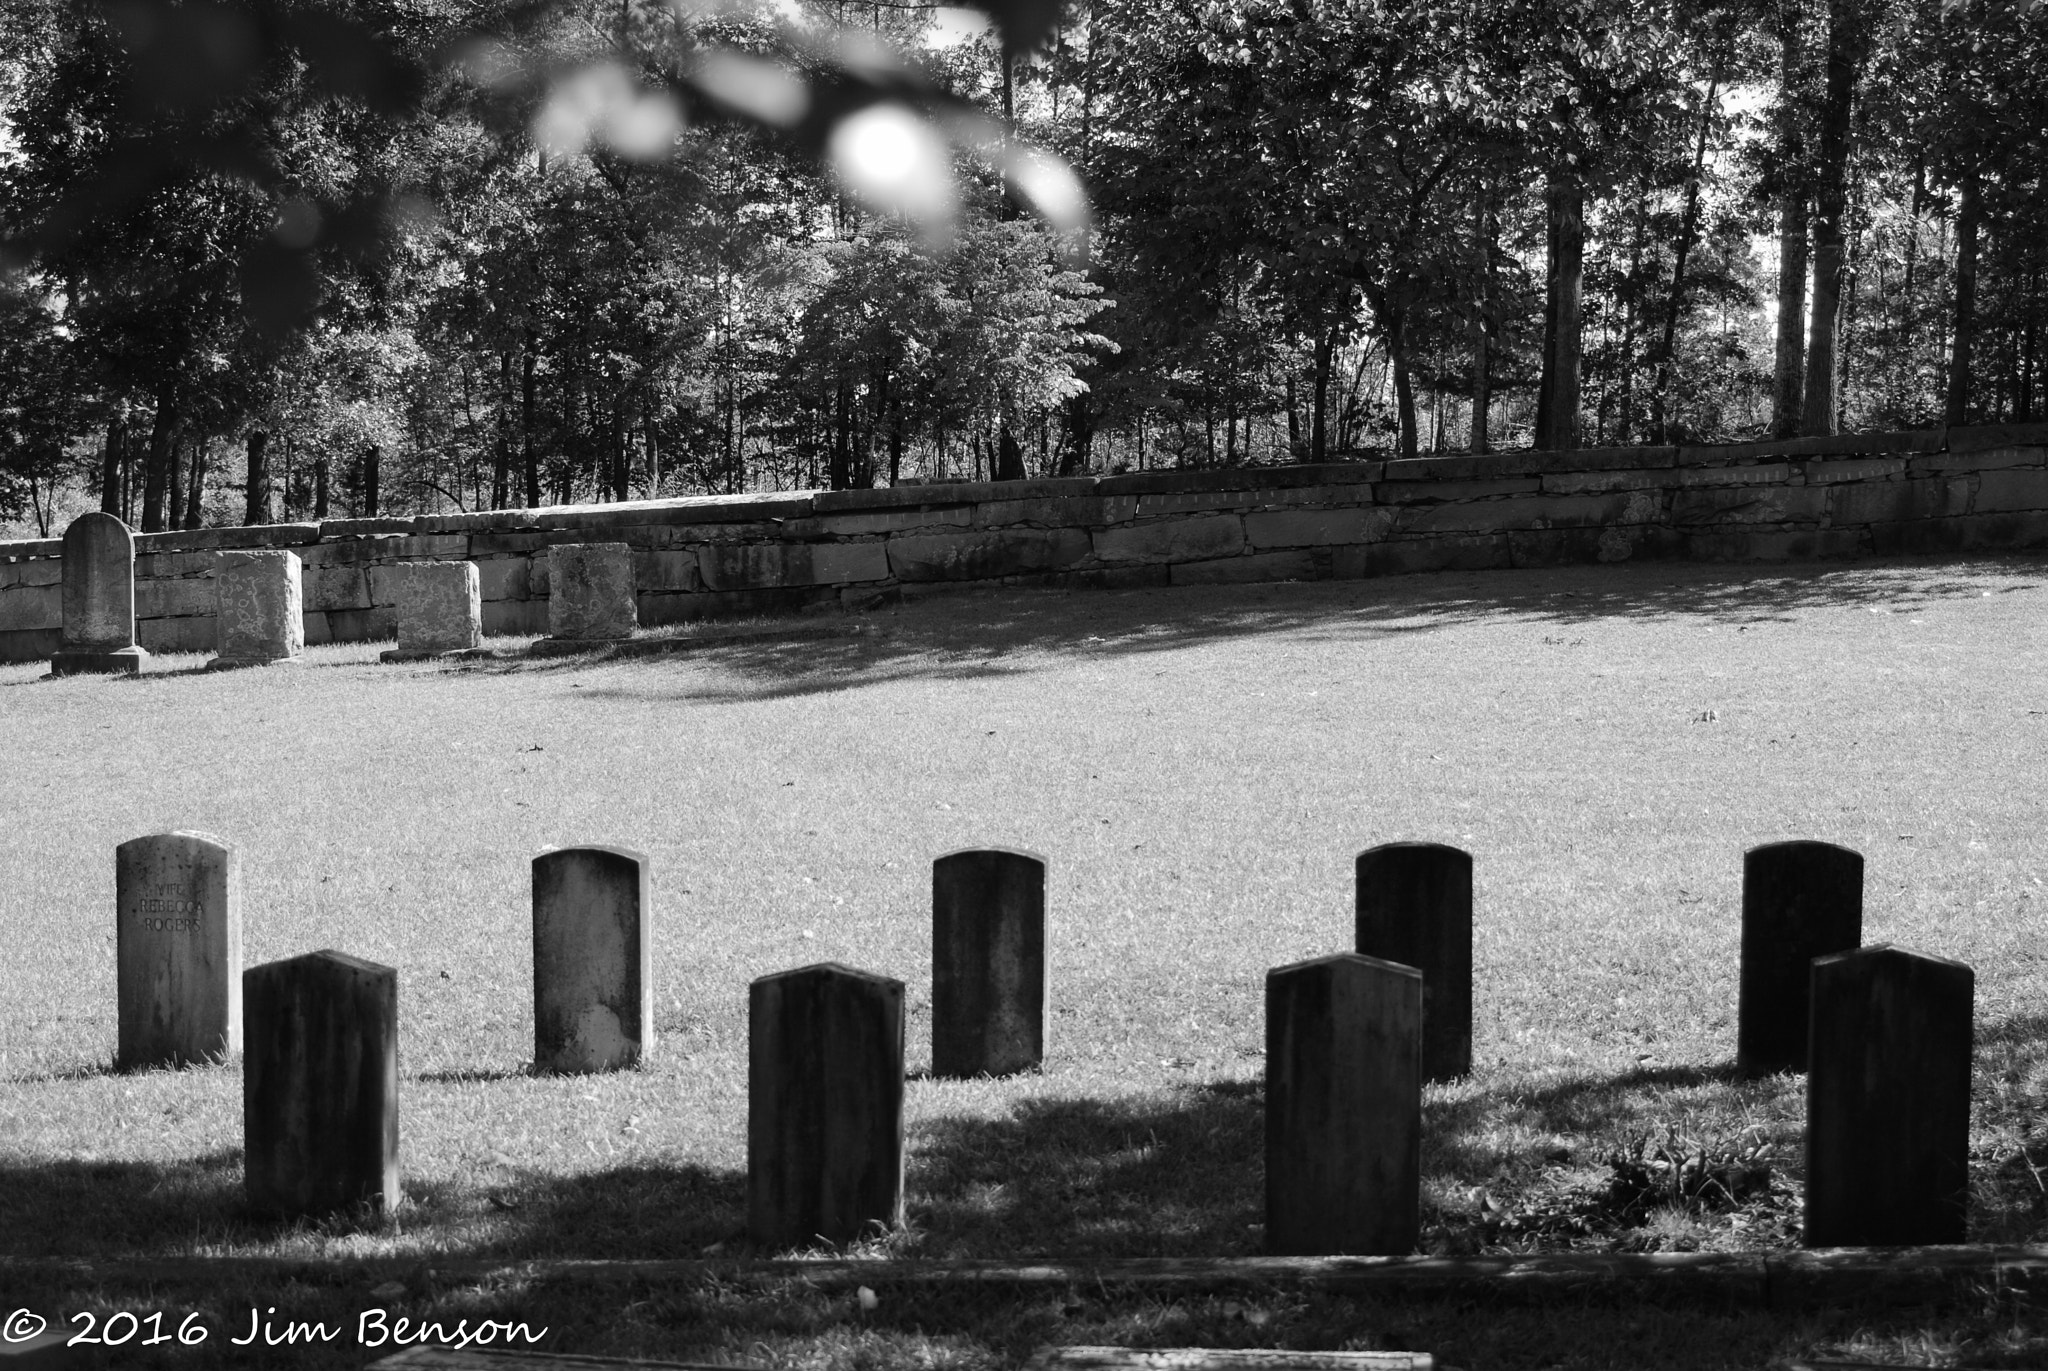 Nikon D80 sample photo. Cedar creek gravesite photography